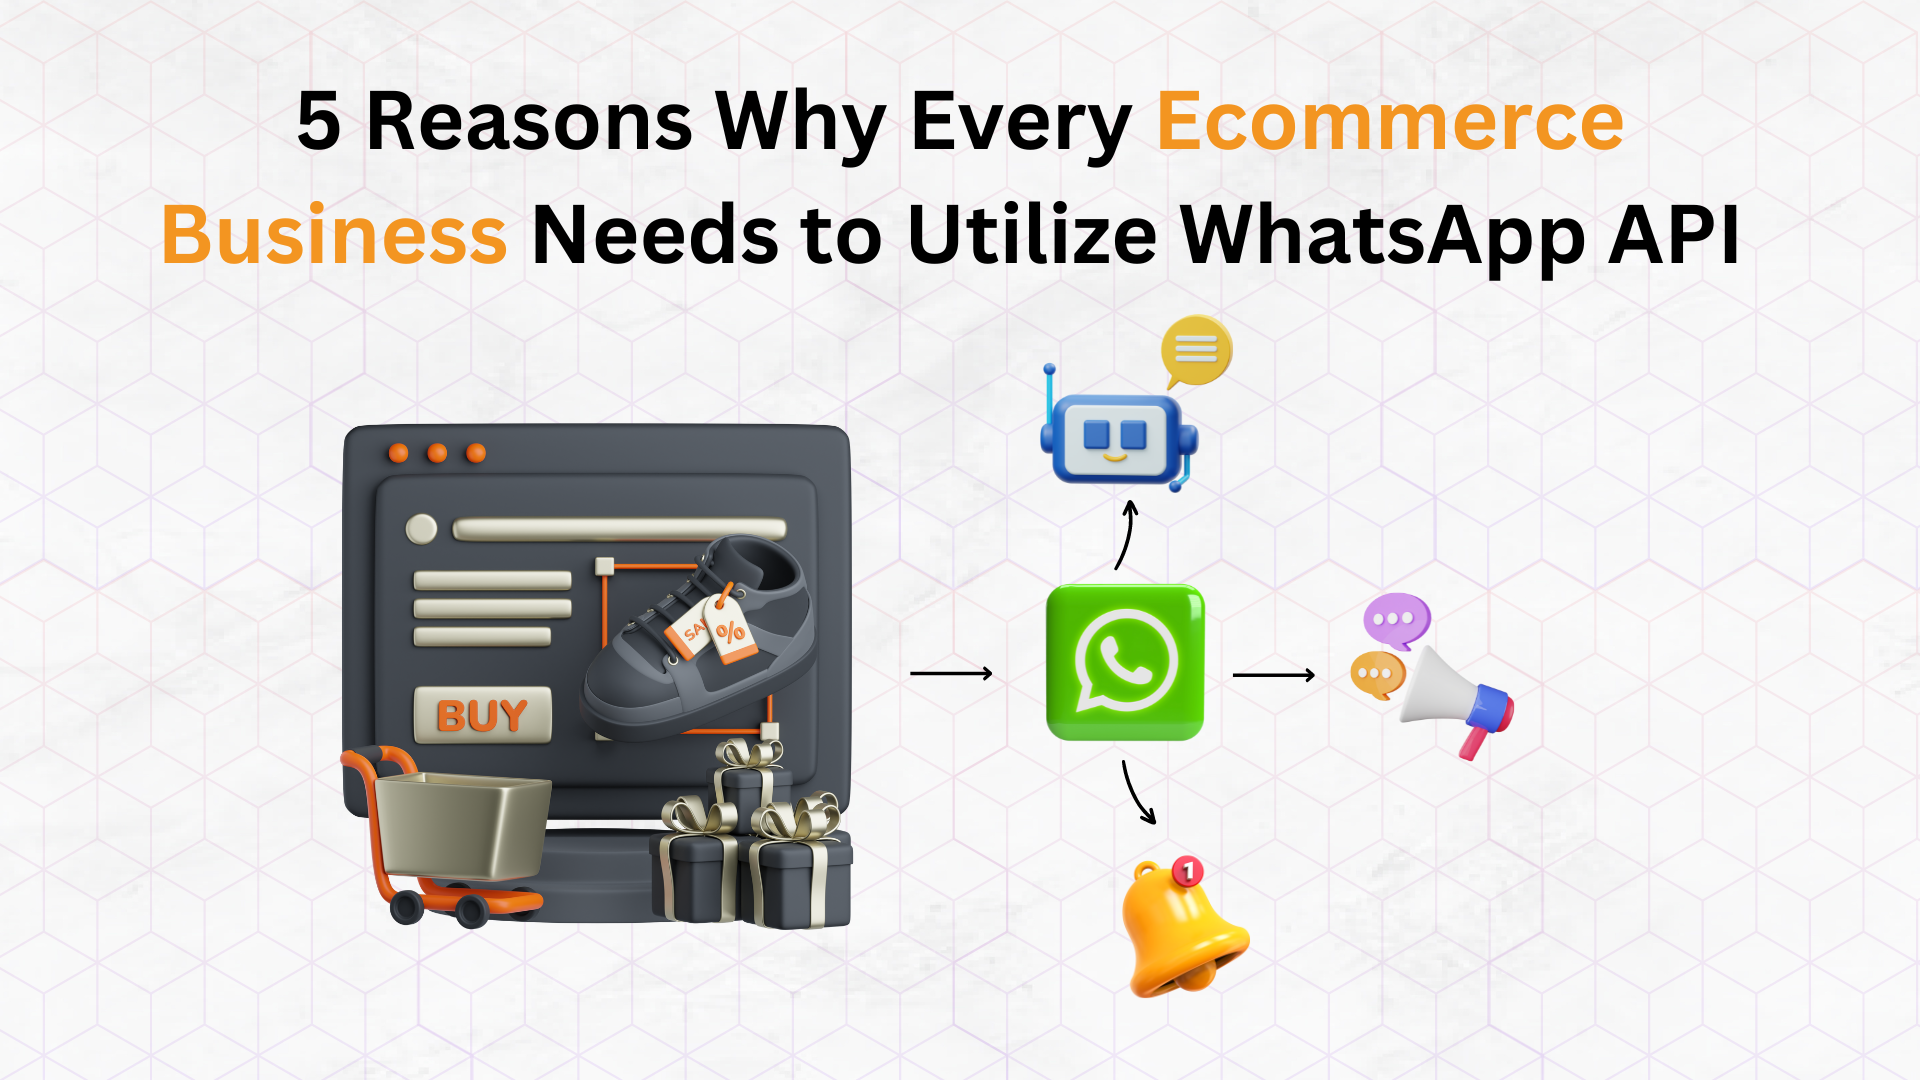 Whatsapp API for ecommerce